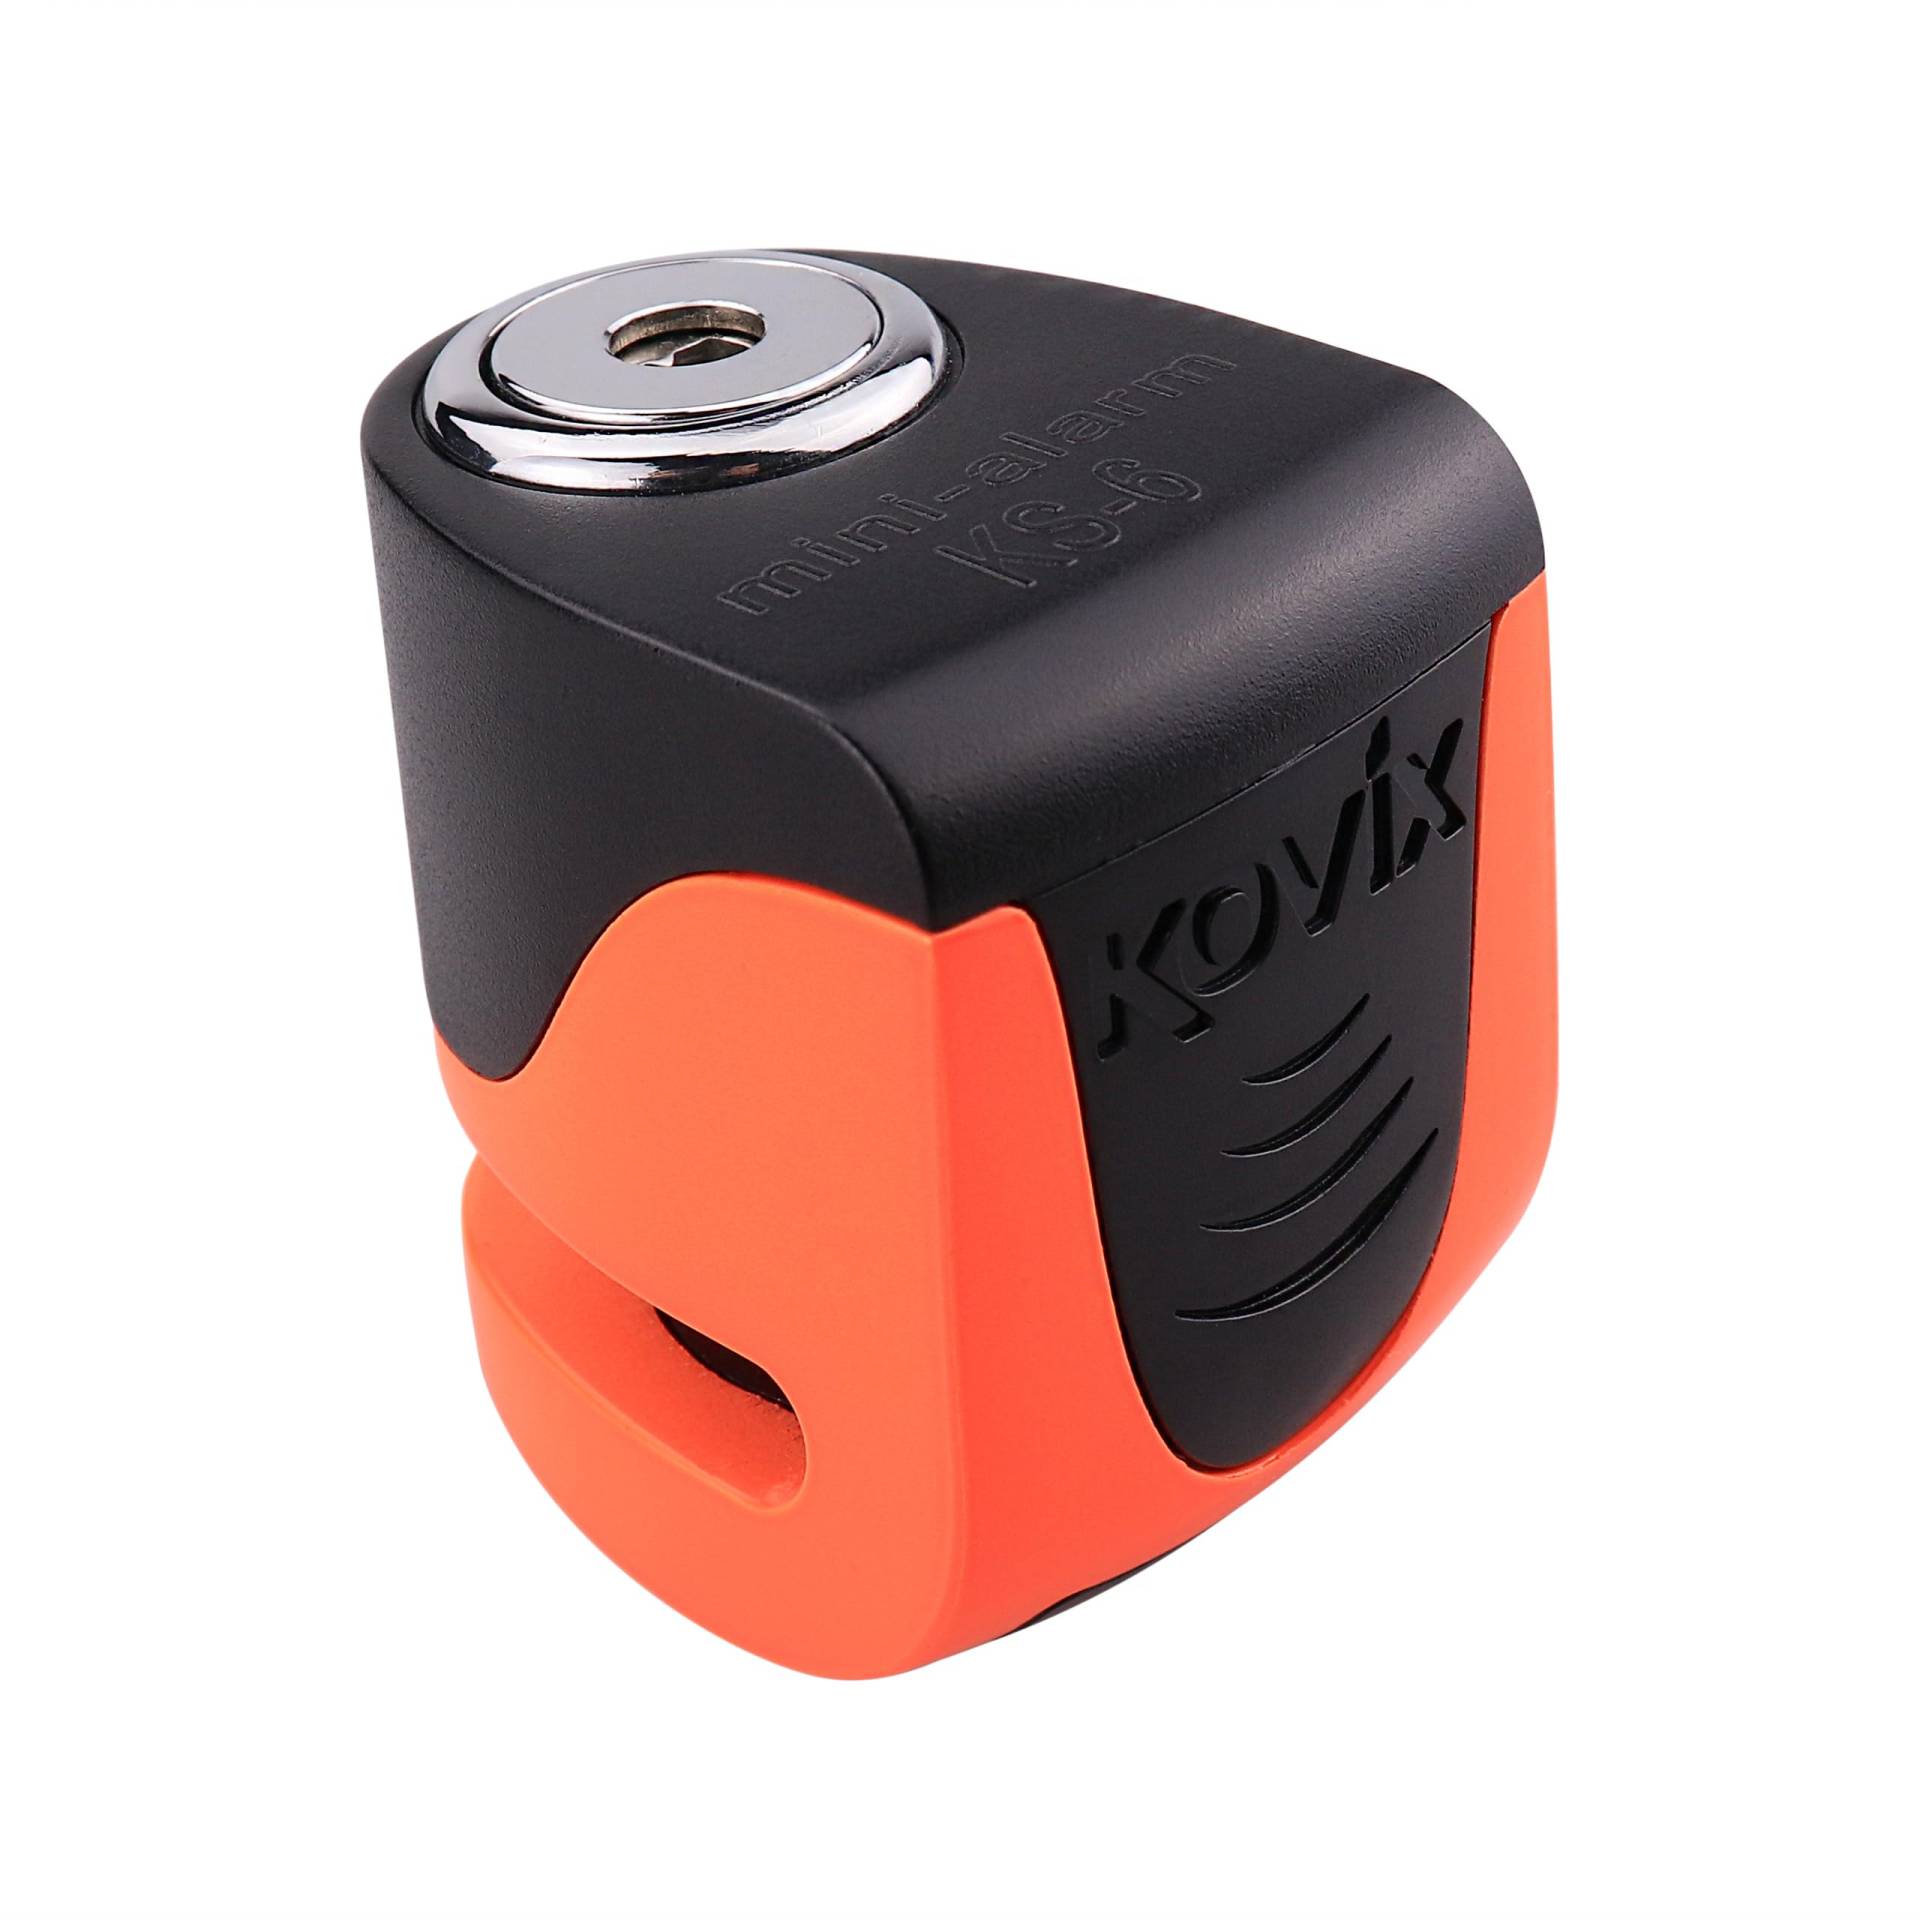 KS6 Series - Disc-Schloss mit Alarm, USB-Ladegerät, Farbe Orange KS6-FO von KOVIX